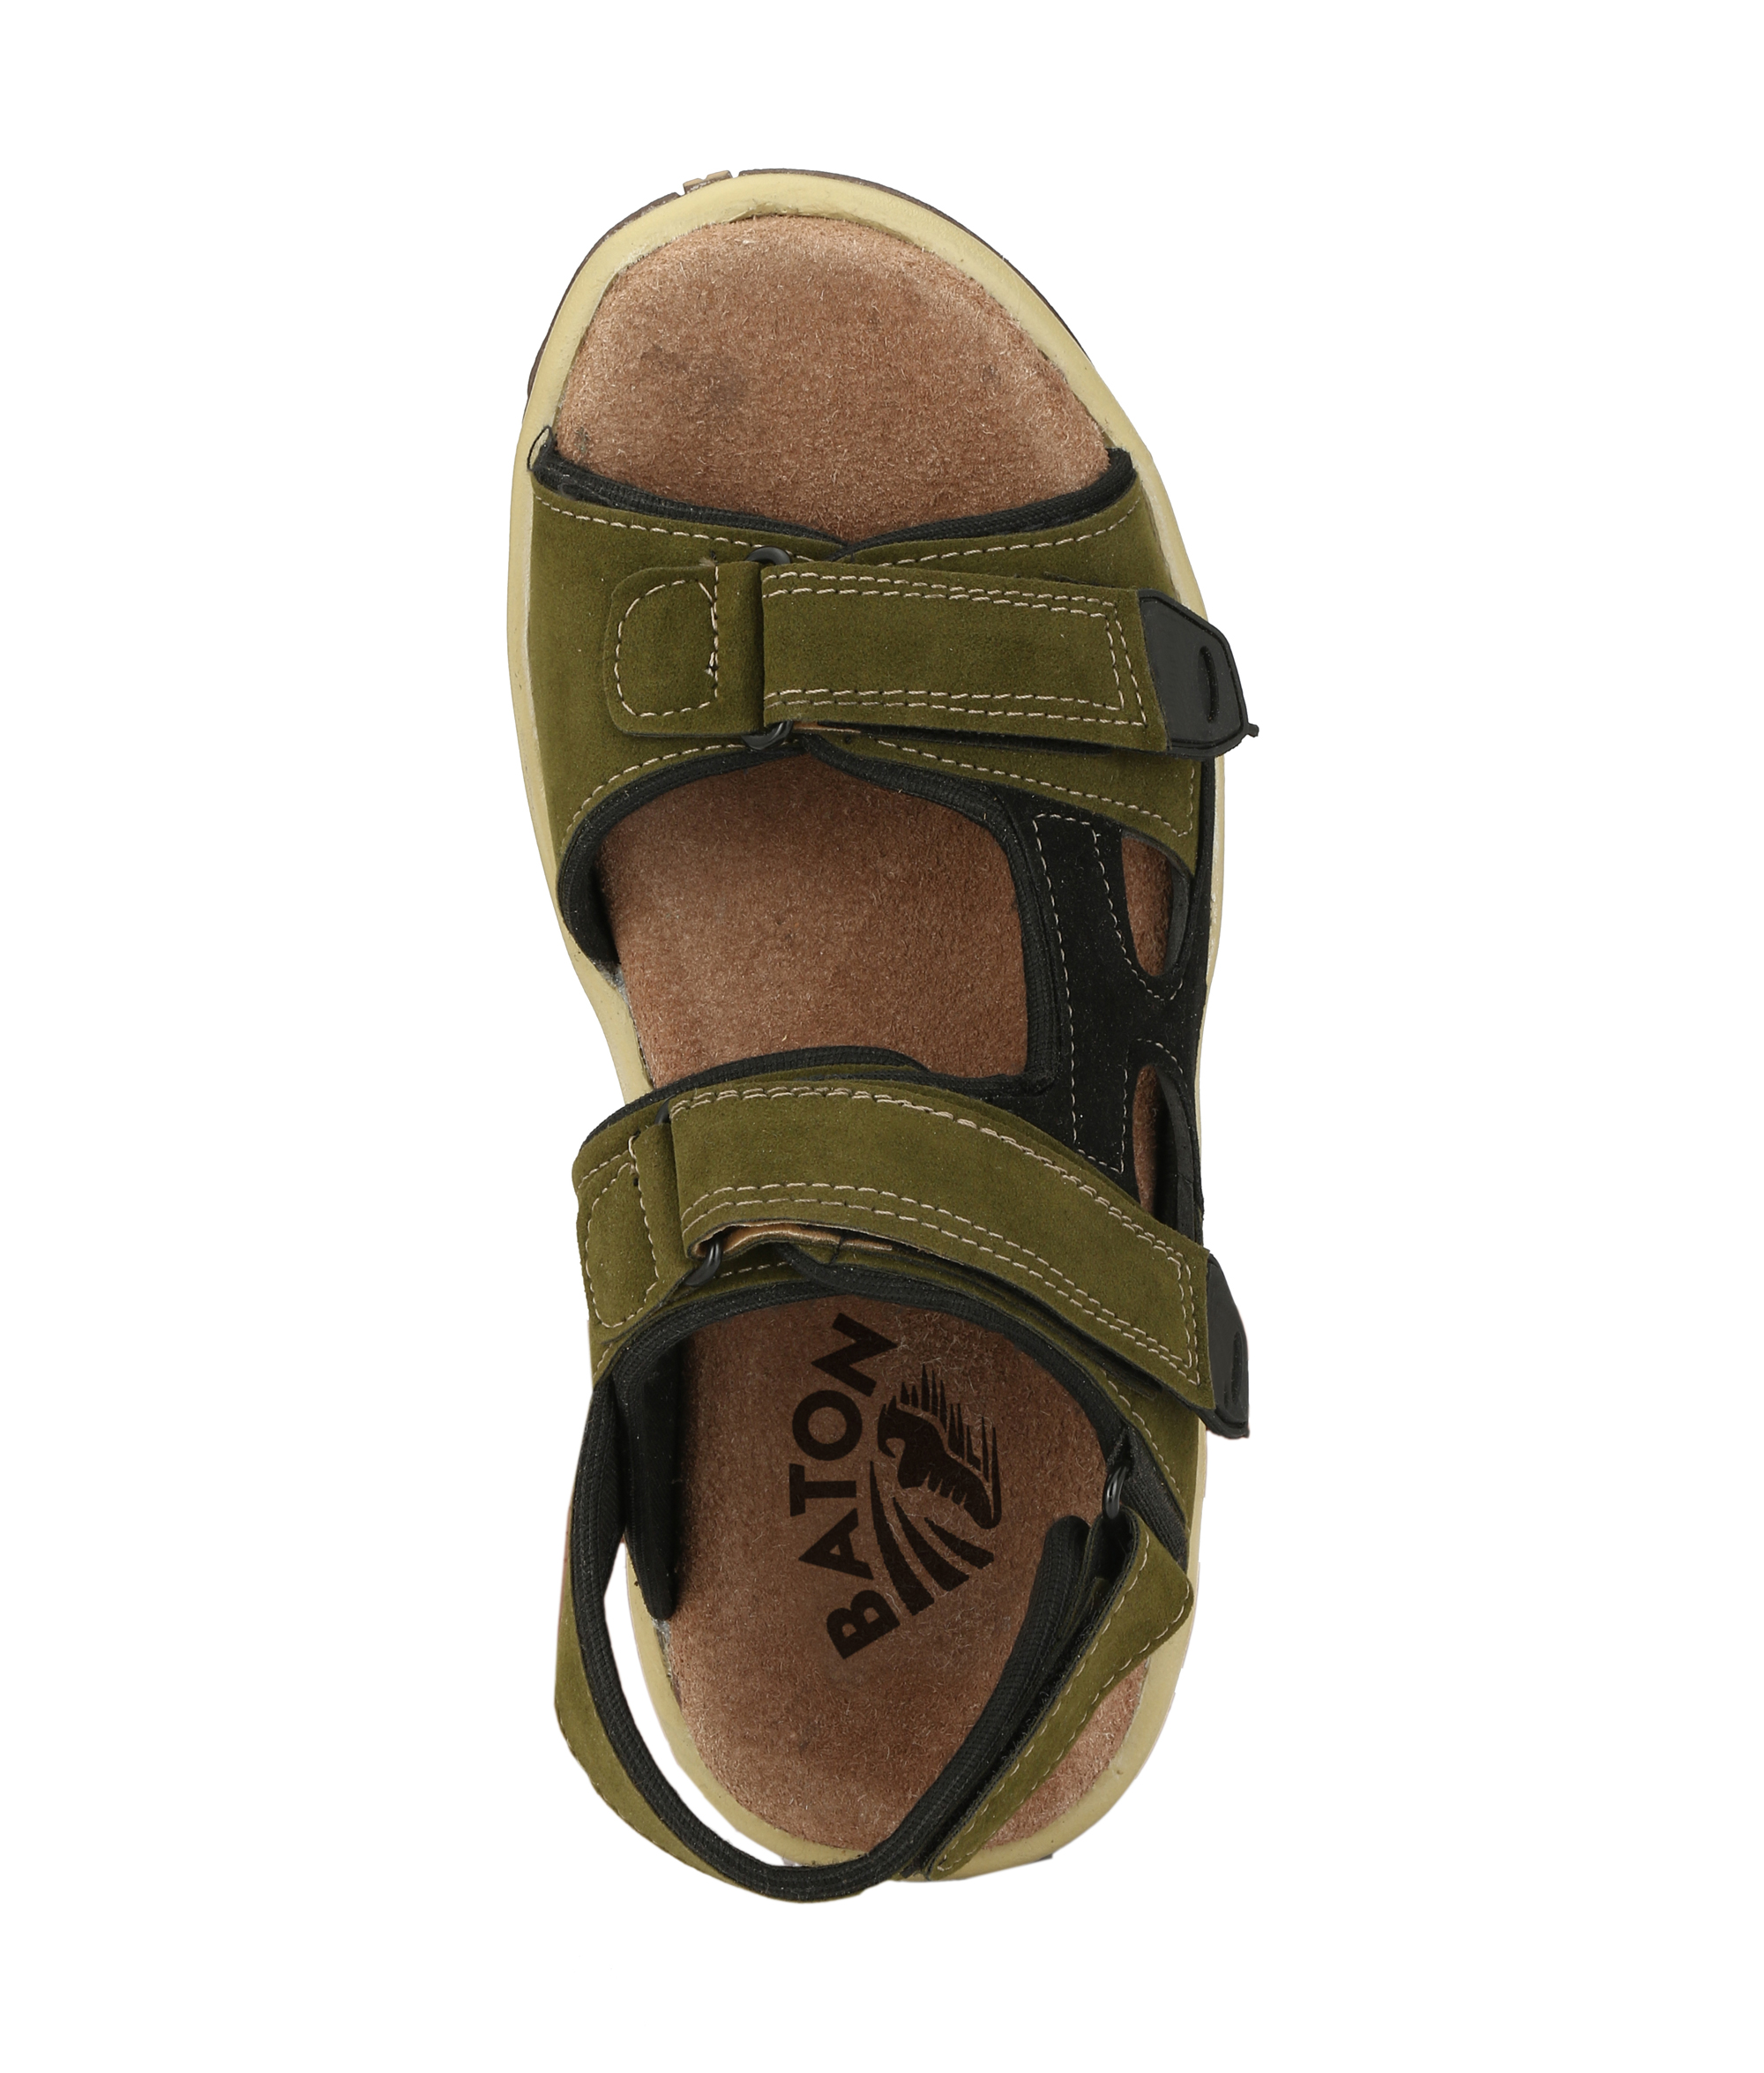 Buy Men's Olive Velcro Sandals Online @ ₹799 from ShopClues